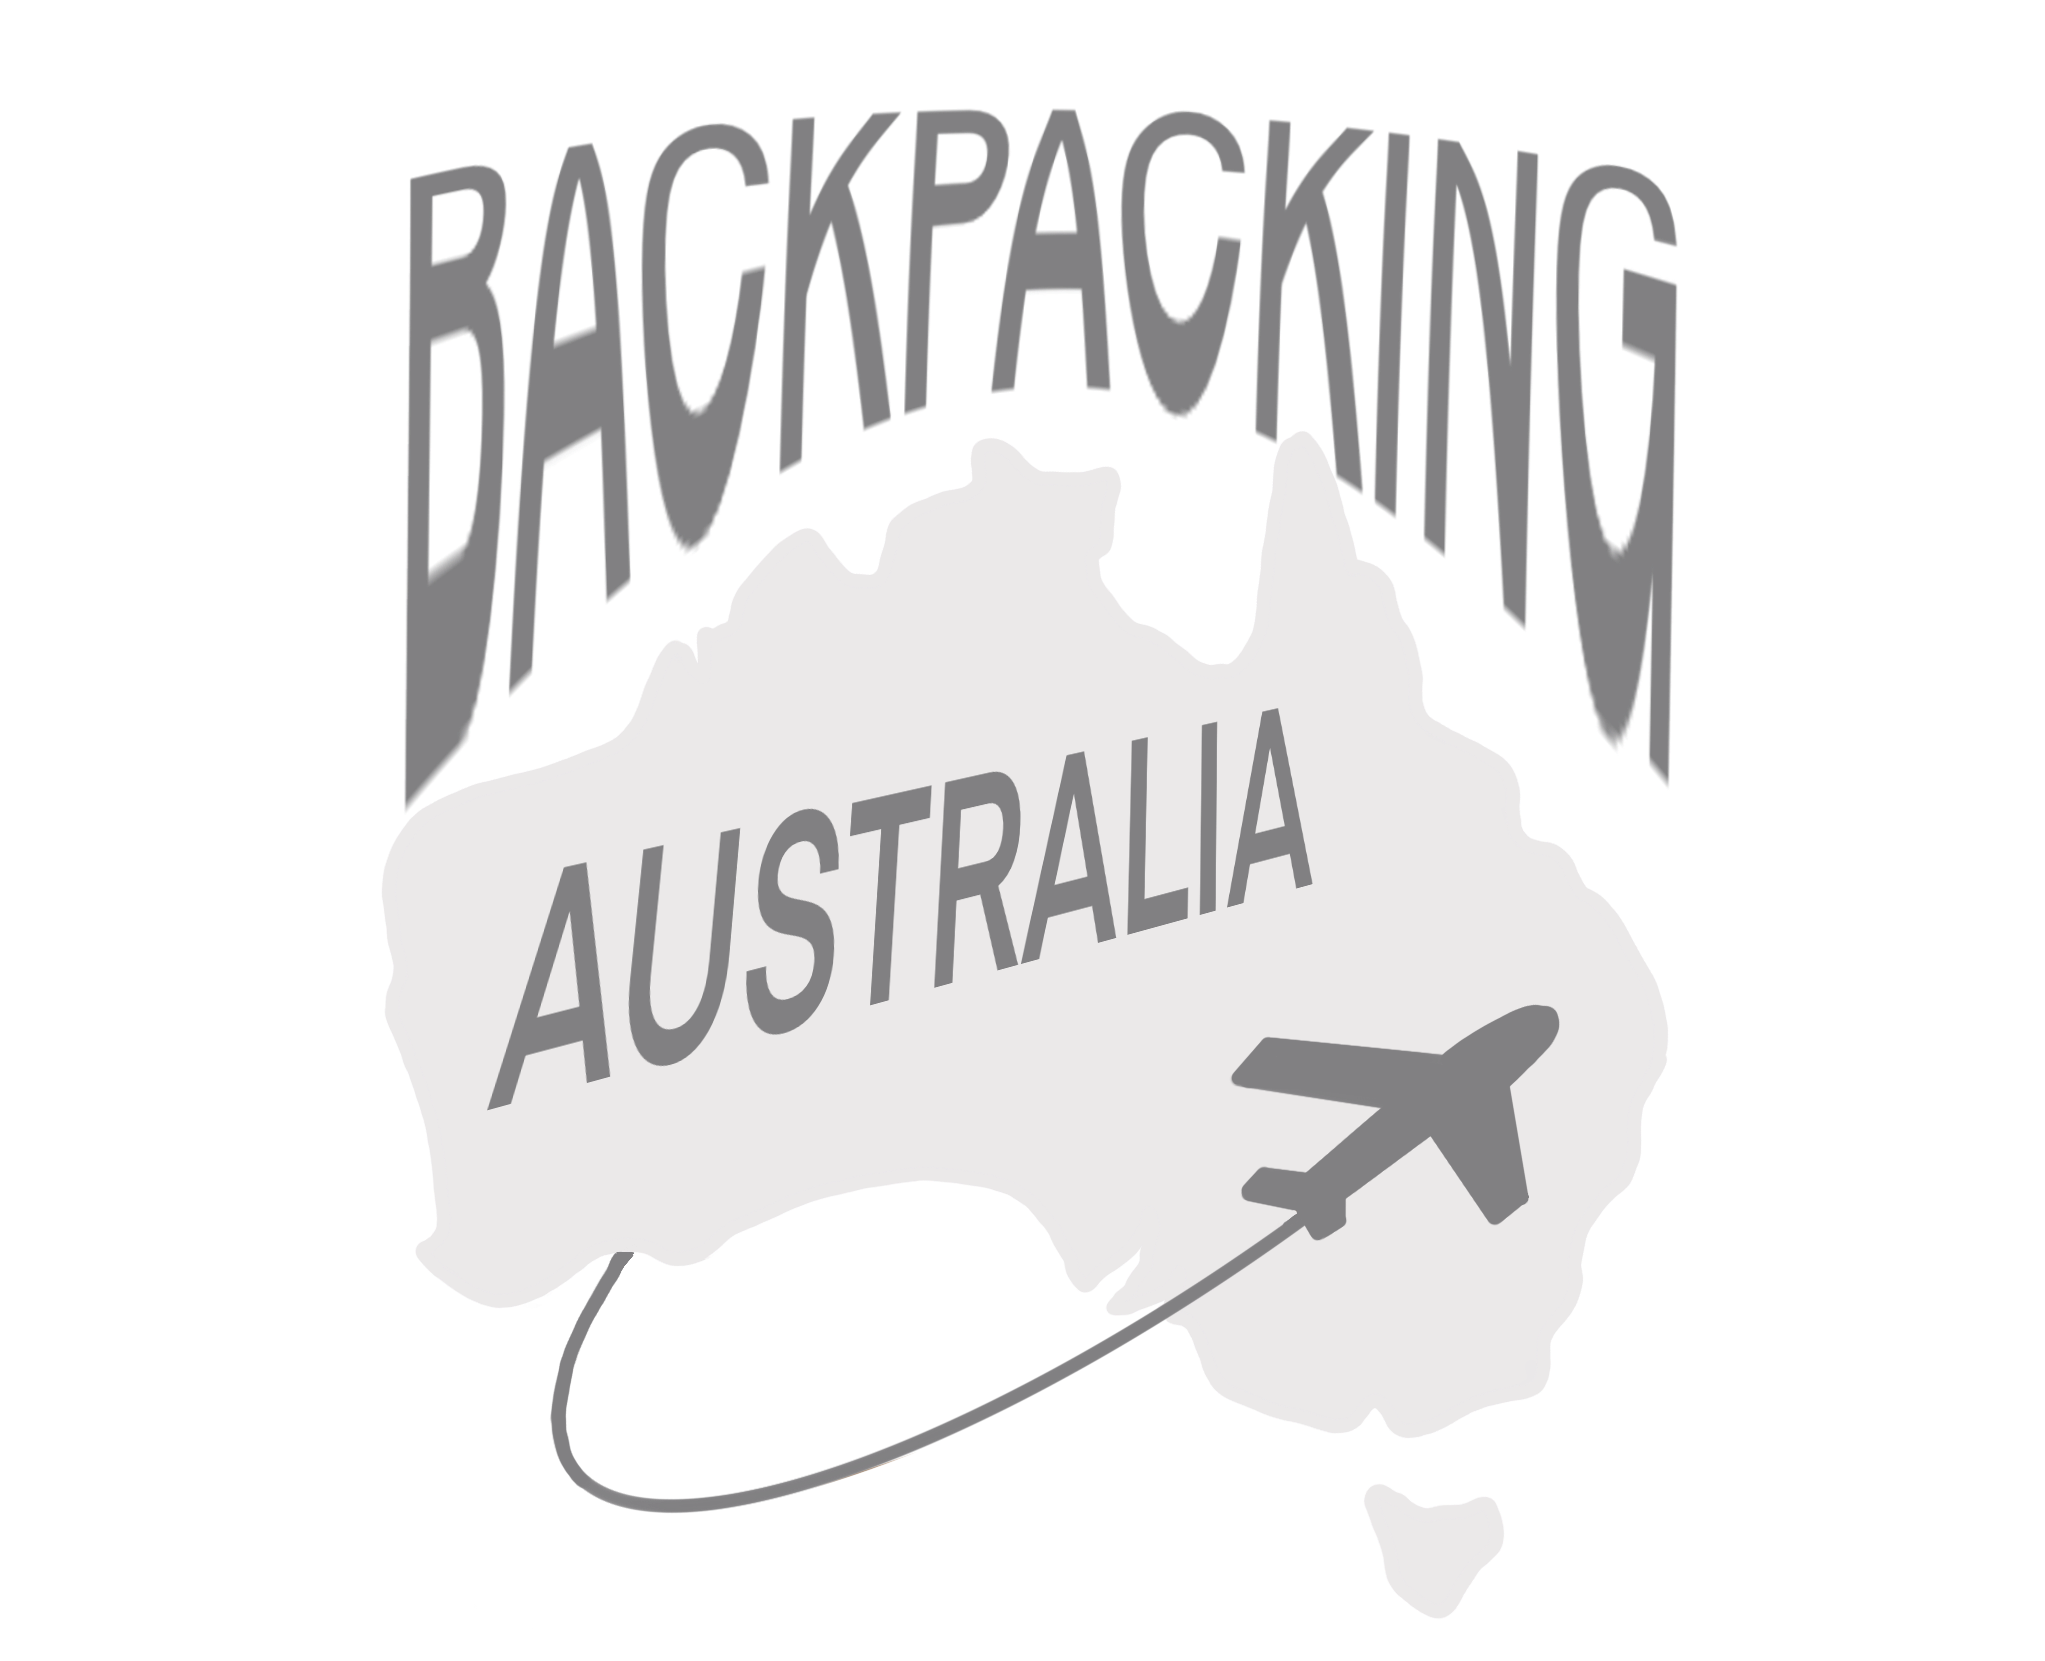 Backpacking Australia